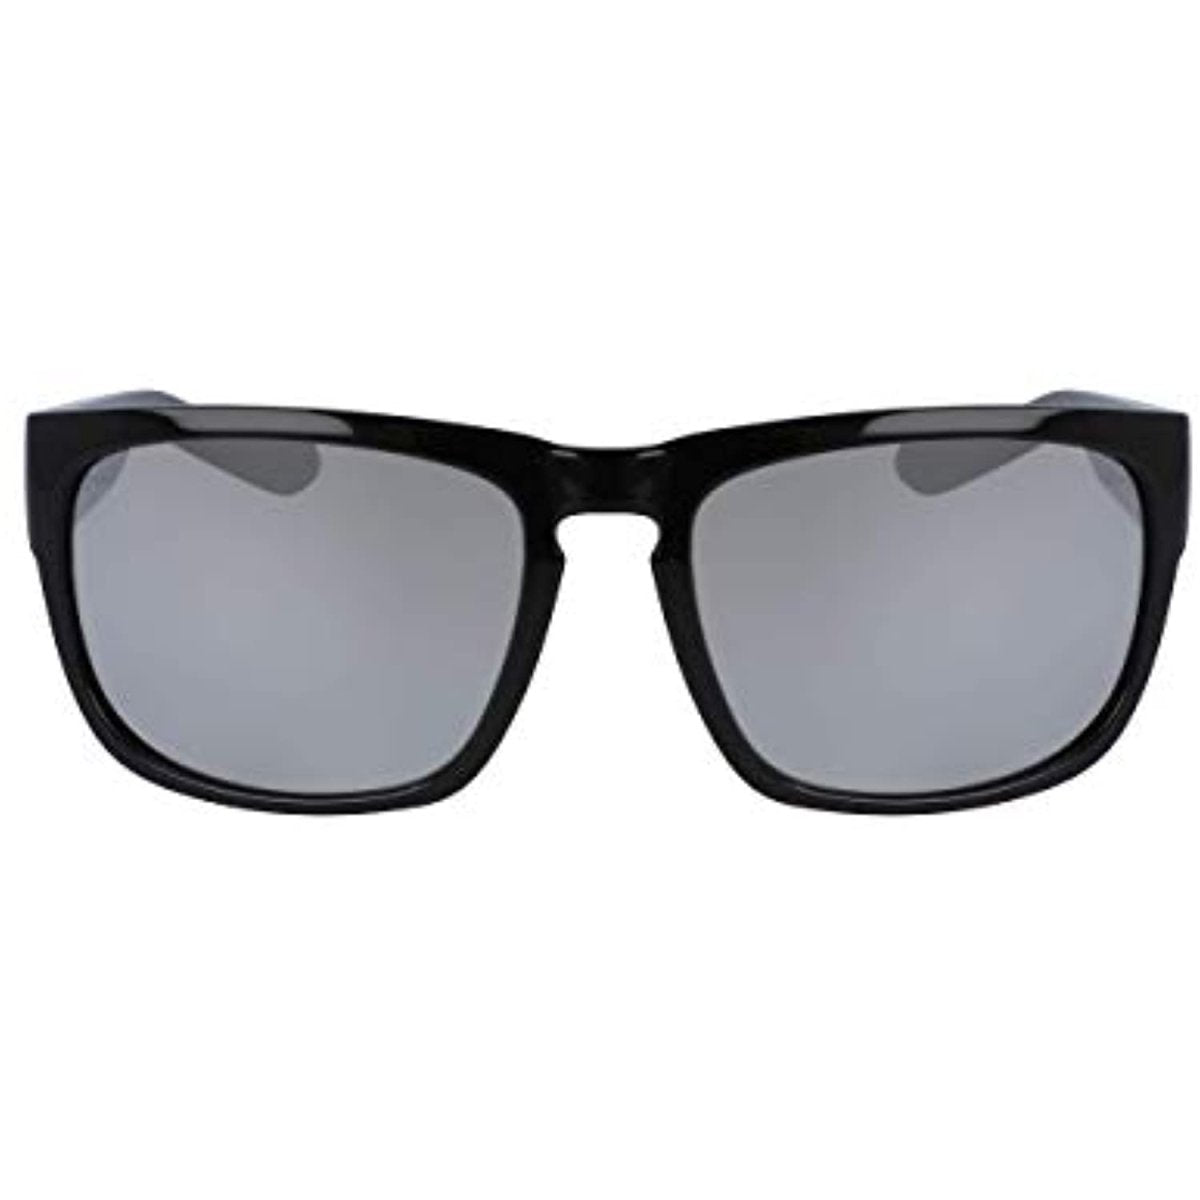 Dragon Men Sunglasses Rune XL ION 011 Shiny Black/Silver Mirrored 100%UV 60-18 - megafashion11Sunglasses